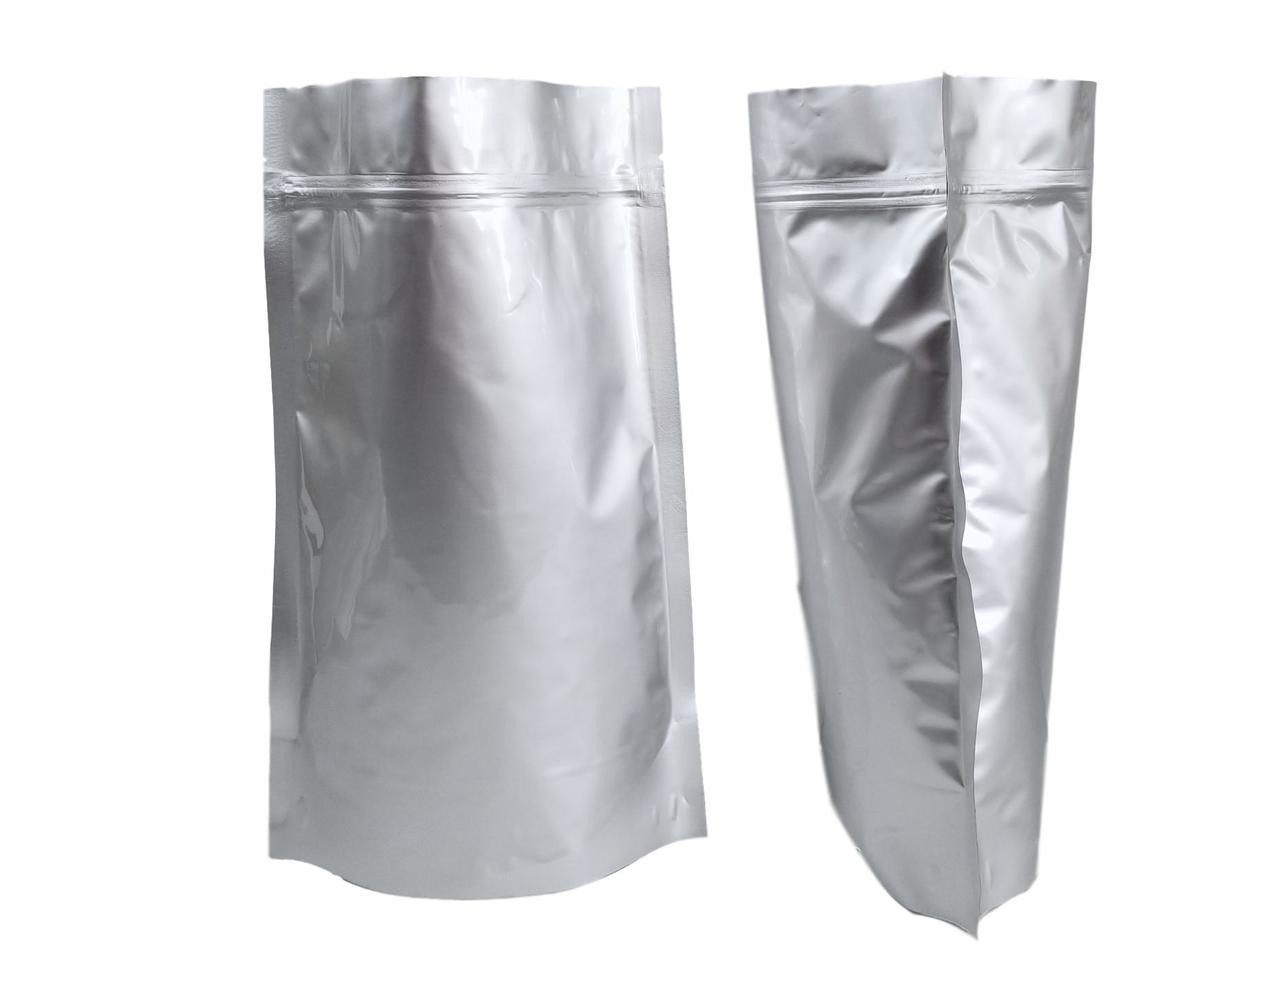 Silver Age 2-Mil Mylar Bags (50 Pk) – HOBBYGUARD